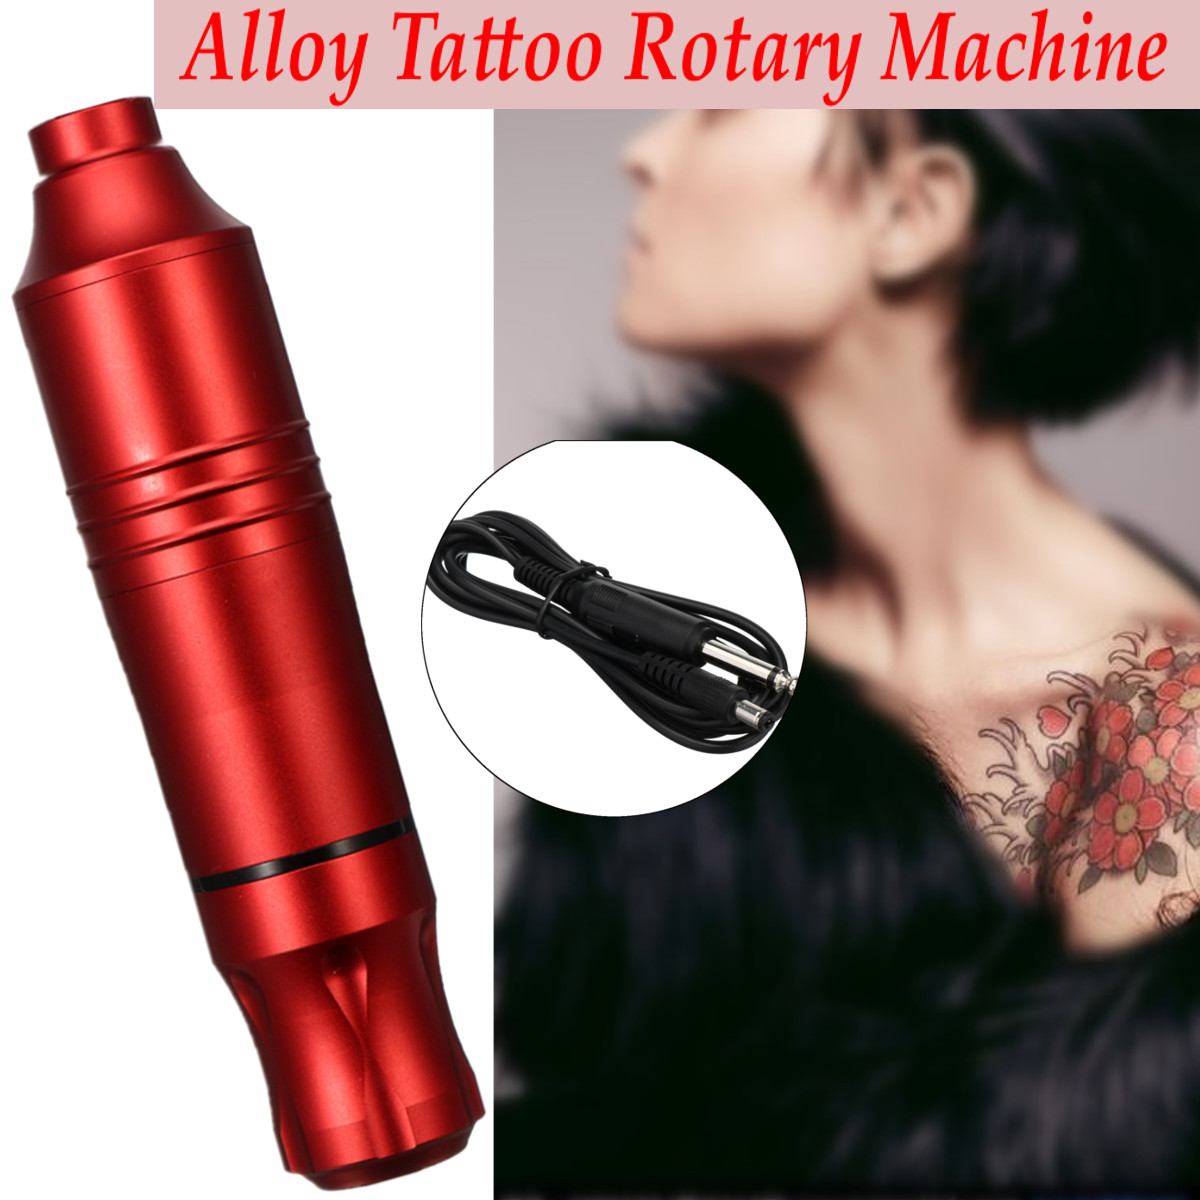 Alloy-Tattoo-Rotary-Machine-Pen-Tattoo-Makeup-Needle-Cartridge-Direct-Drive-1471342